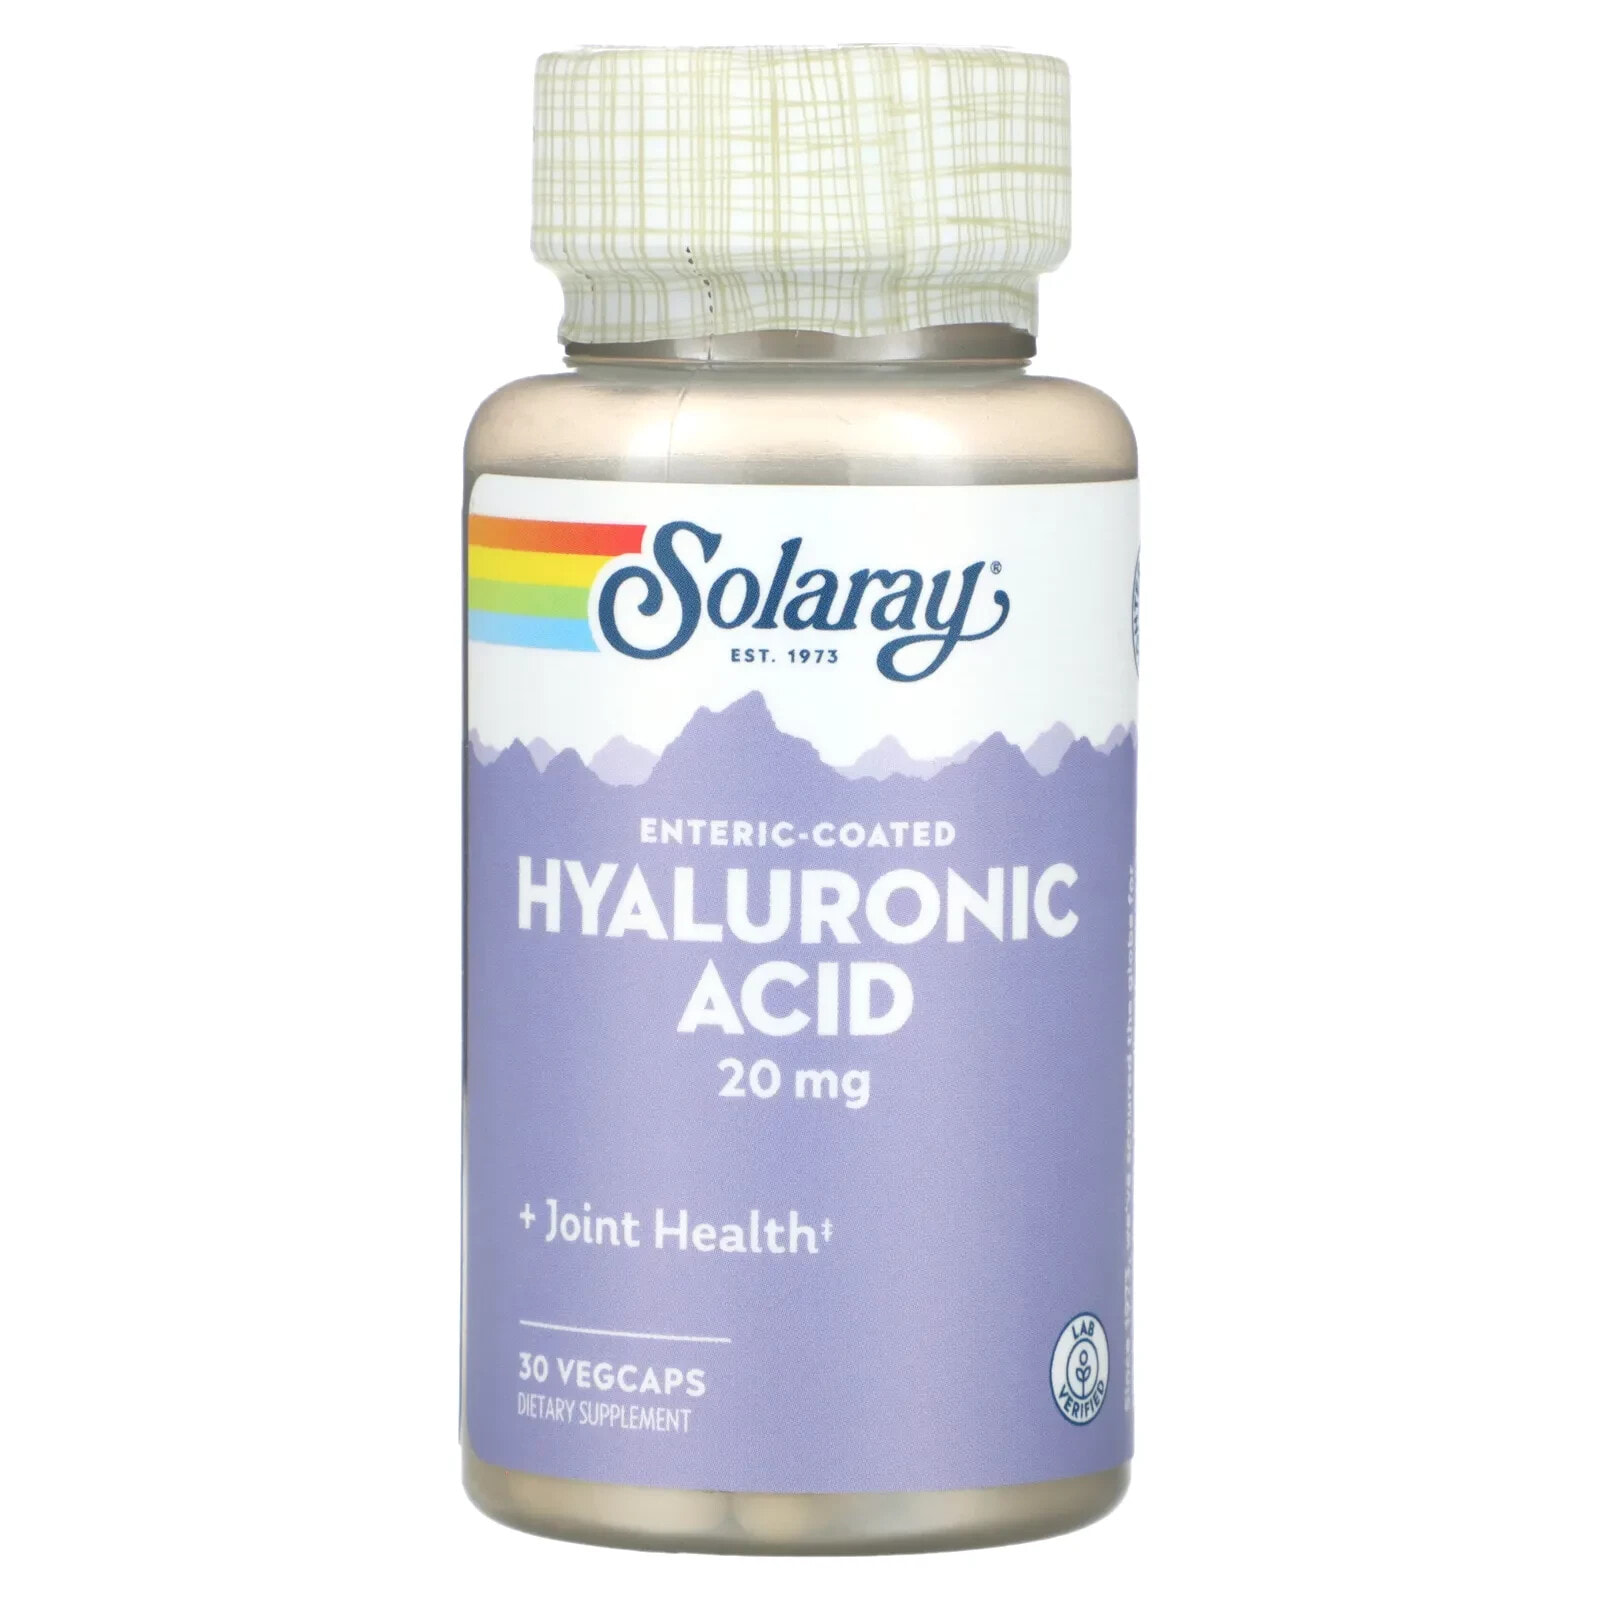 Solaray, Enteric-Coated Hyaluronic Acid, 20 mg, 30 VEGCAPS